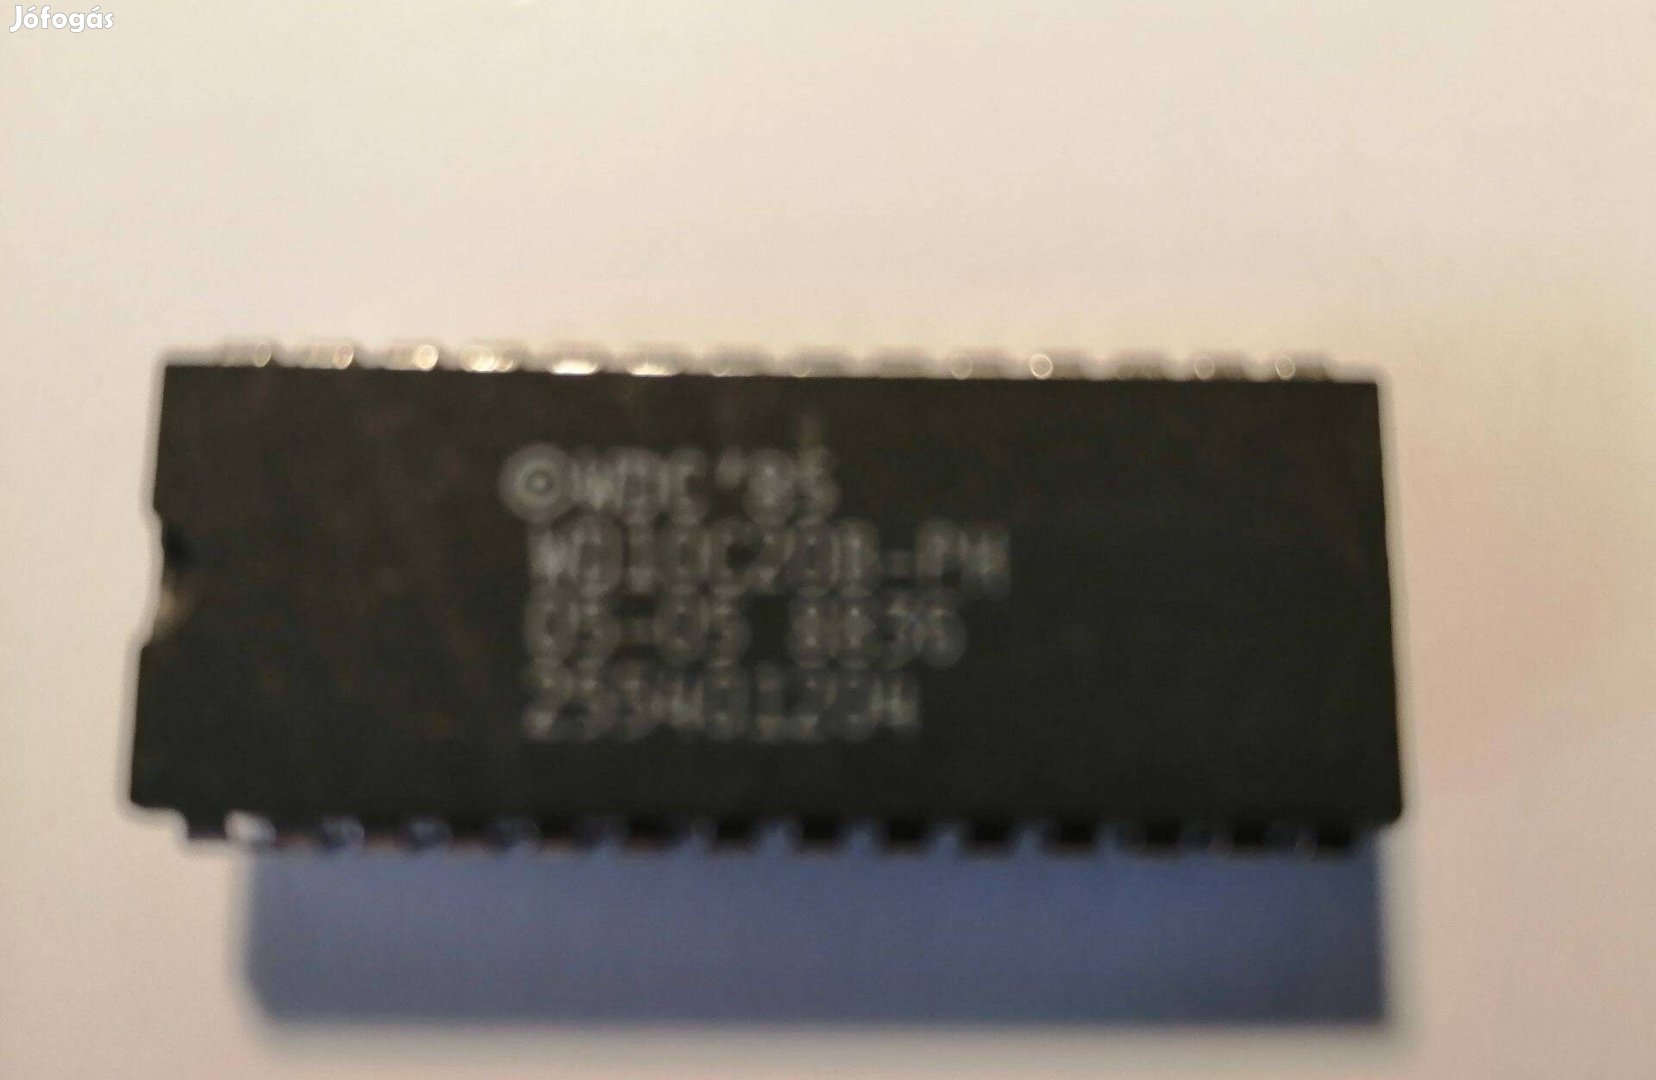 WD 1020B-PH Chip